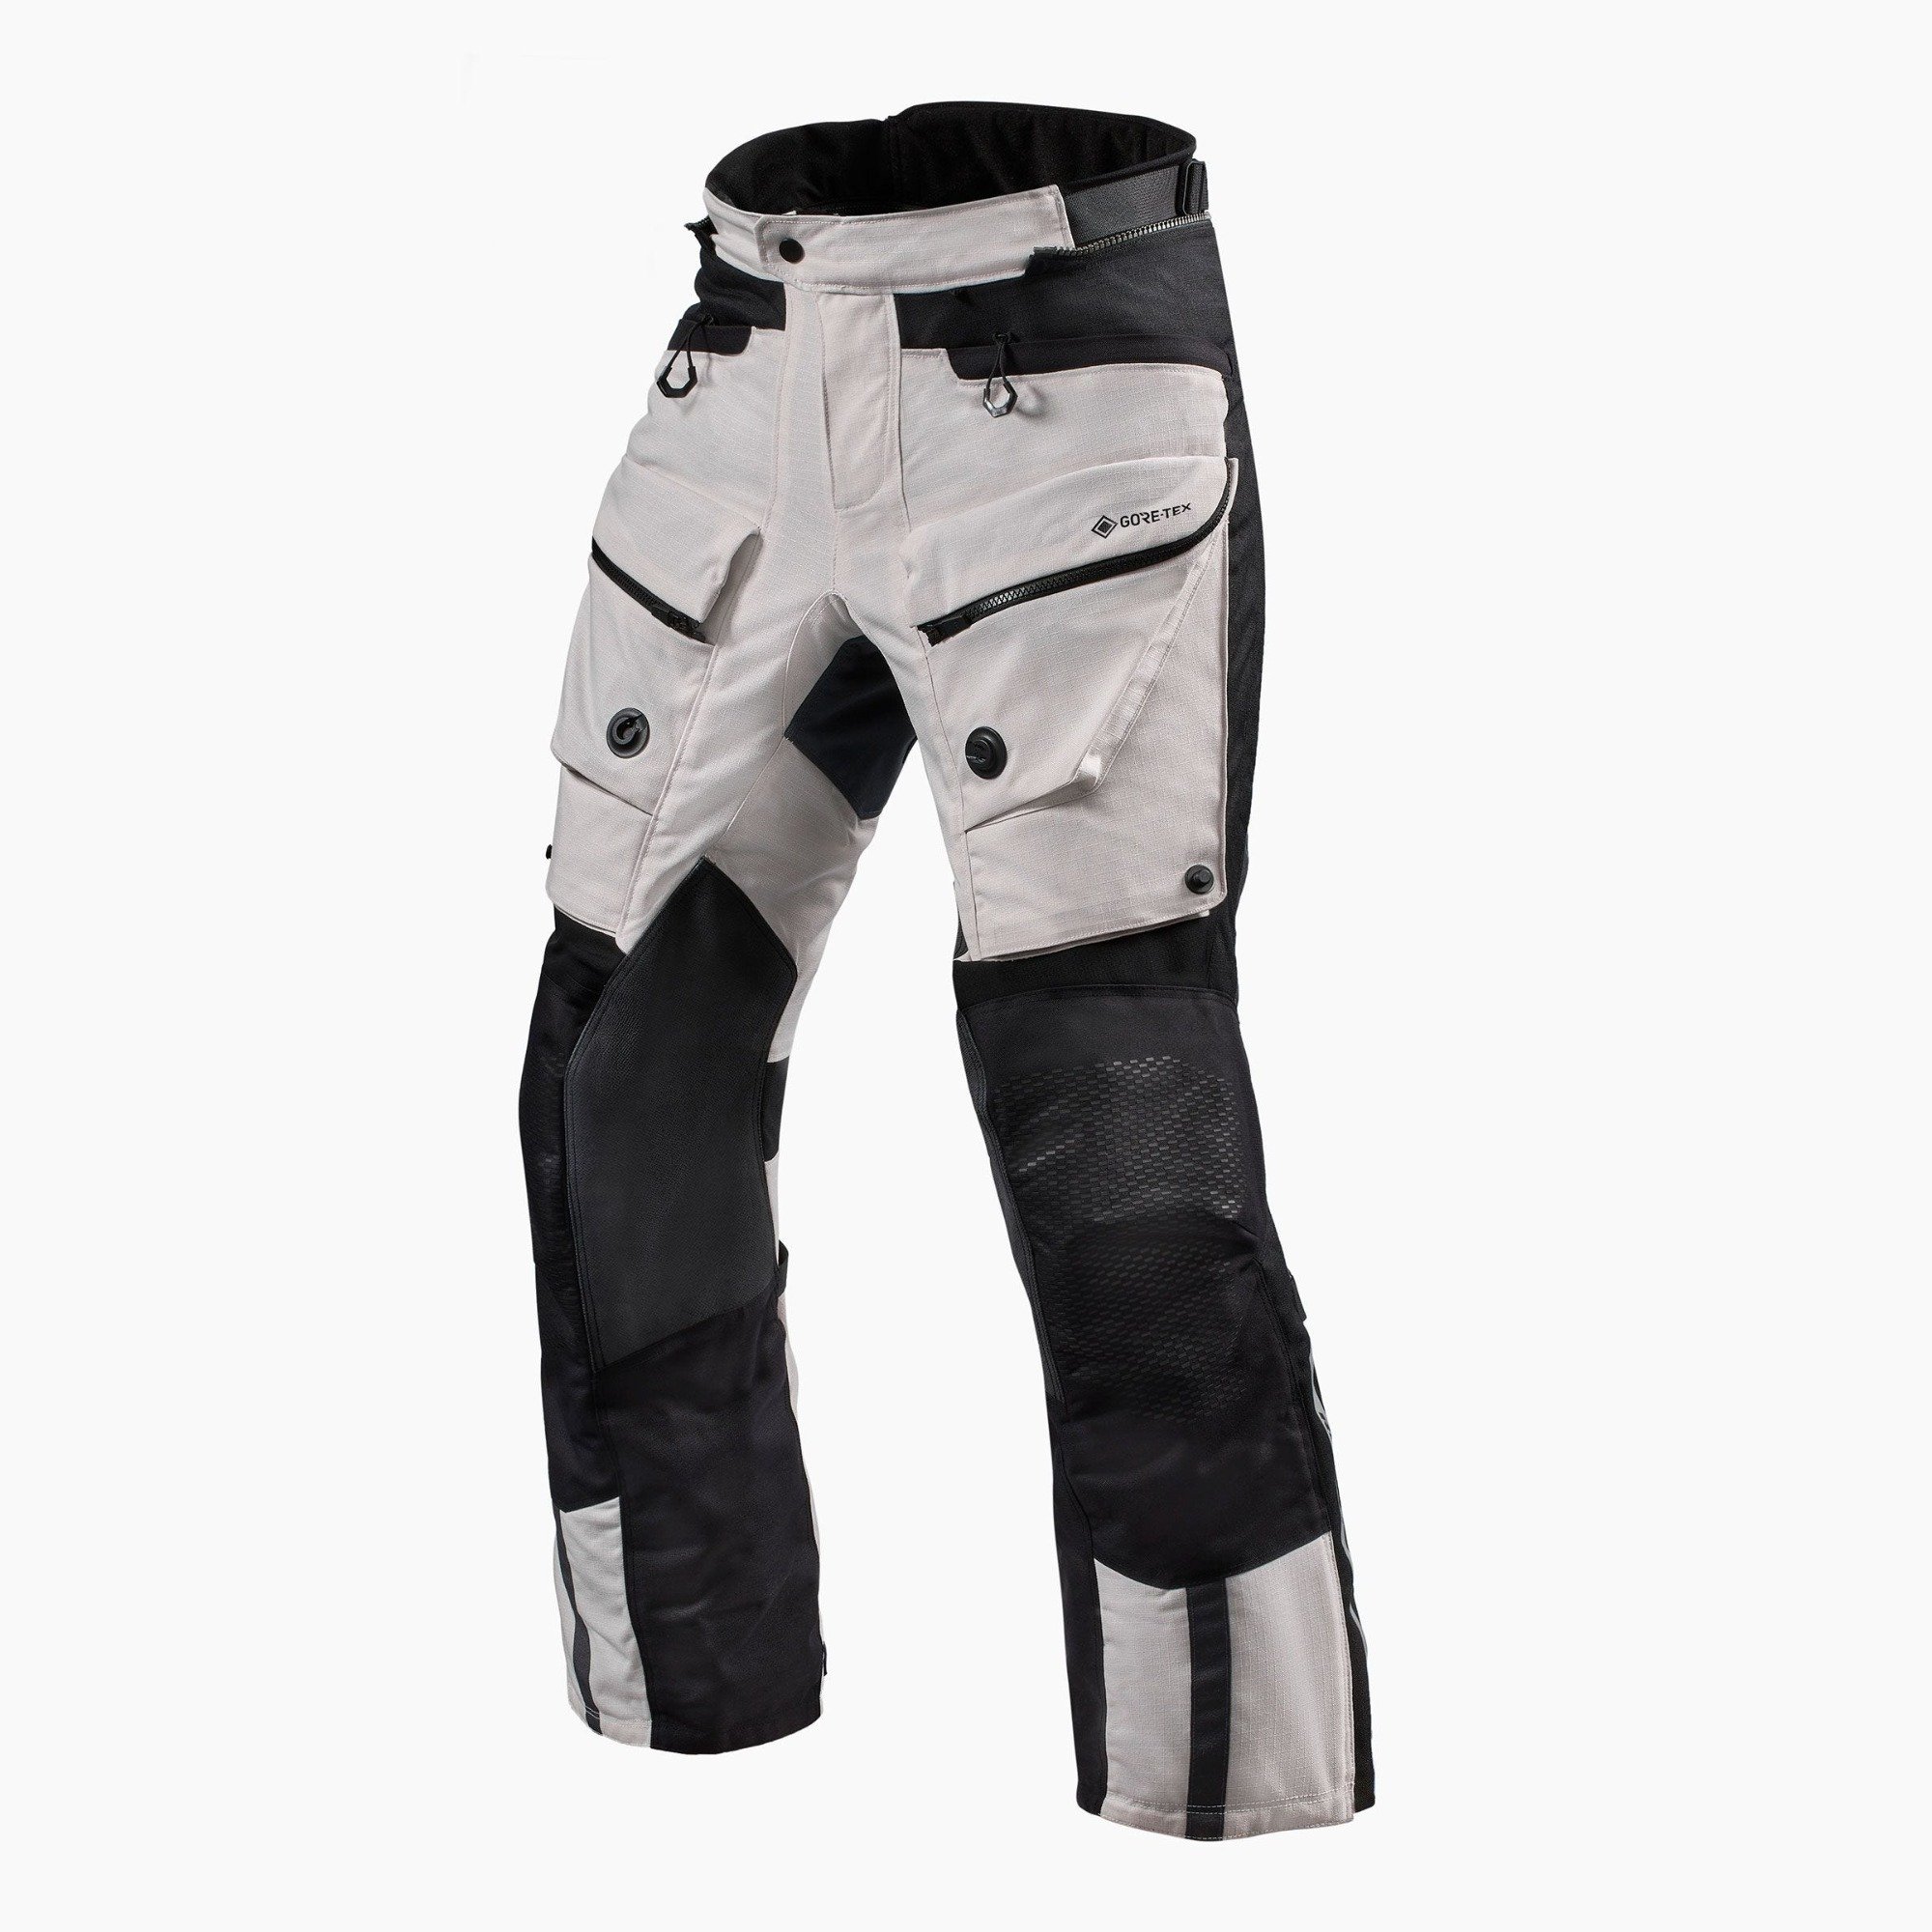 Image of REV'IT! Trousers Defender 3 GTX Silver Black Standard Motorcycle Pants Talla M